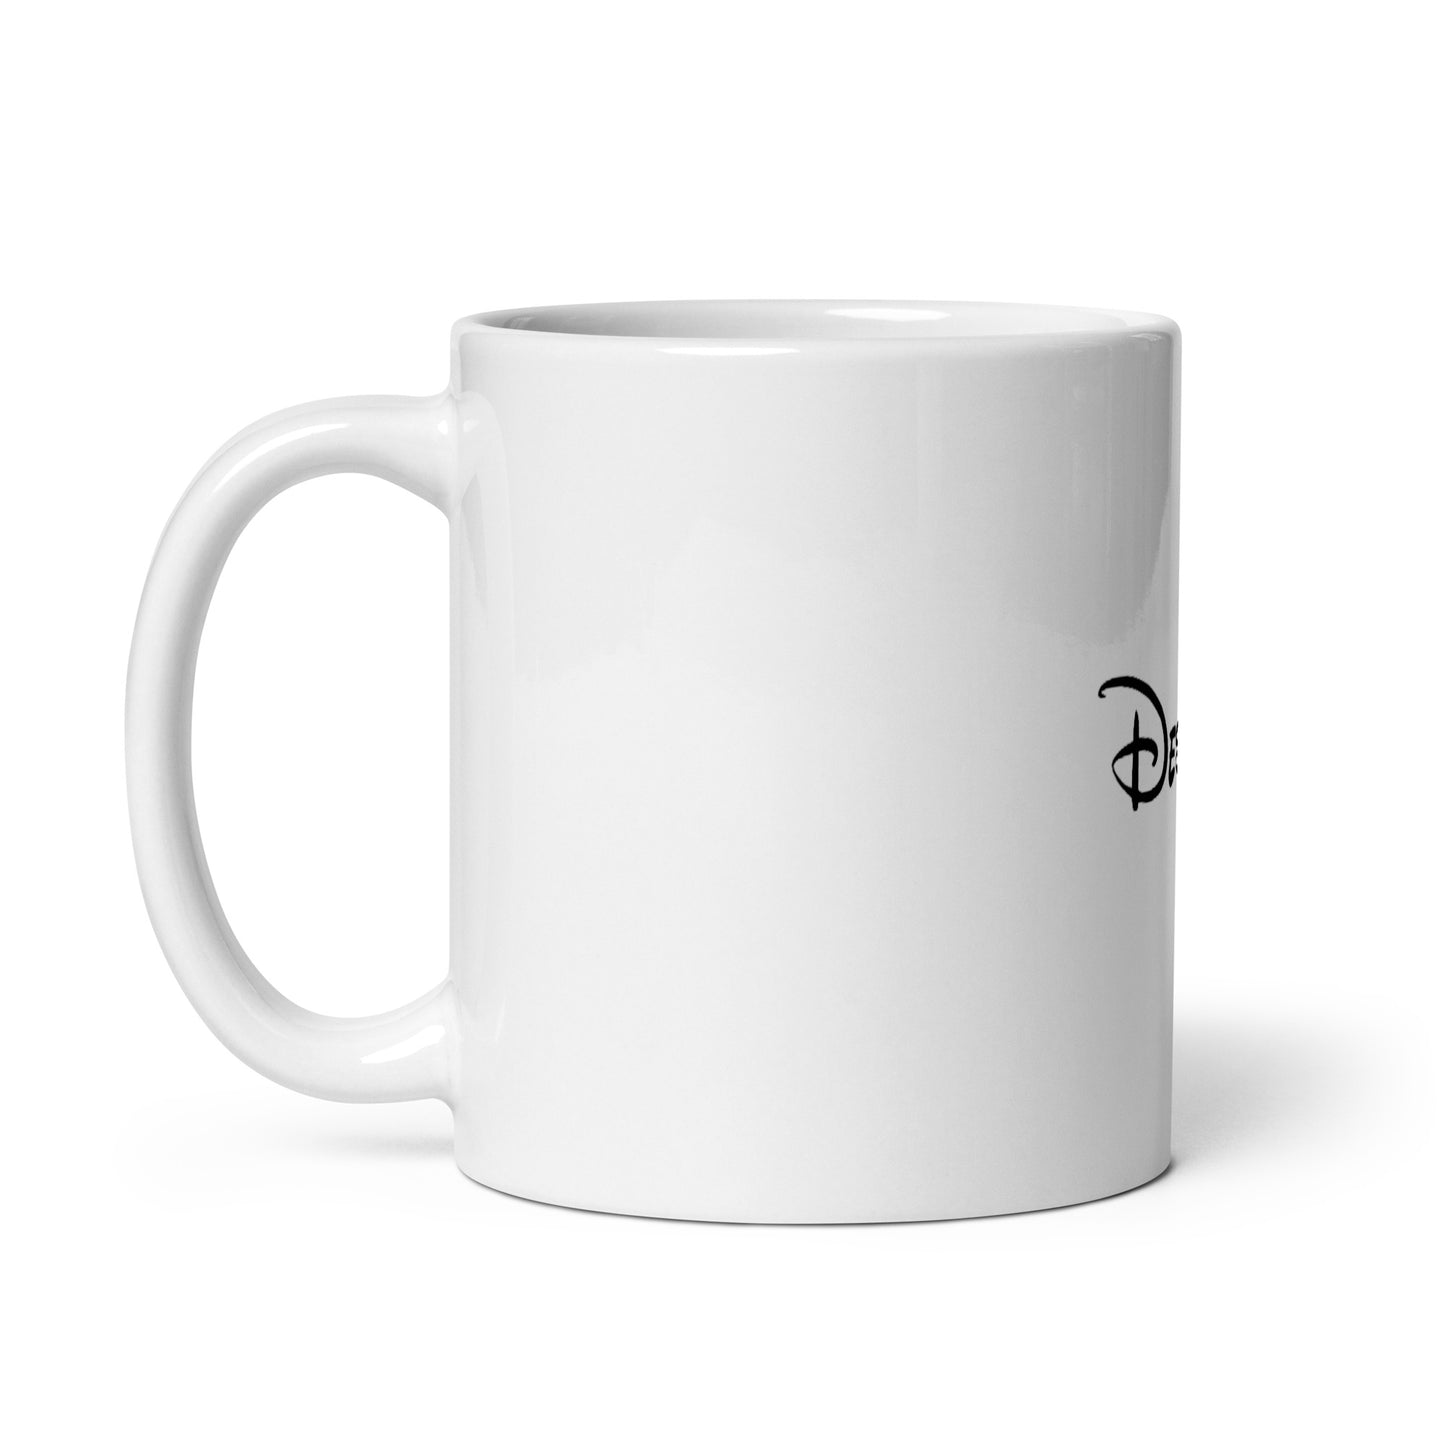 Designer Disney Font mug